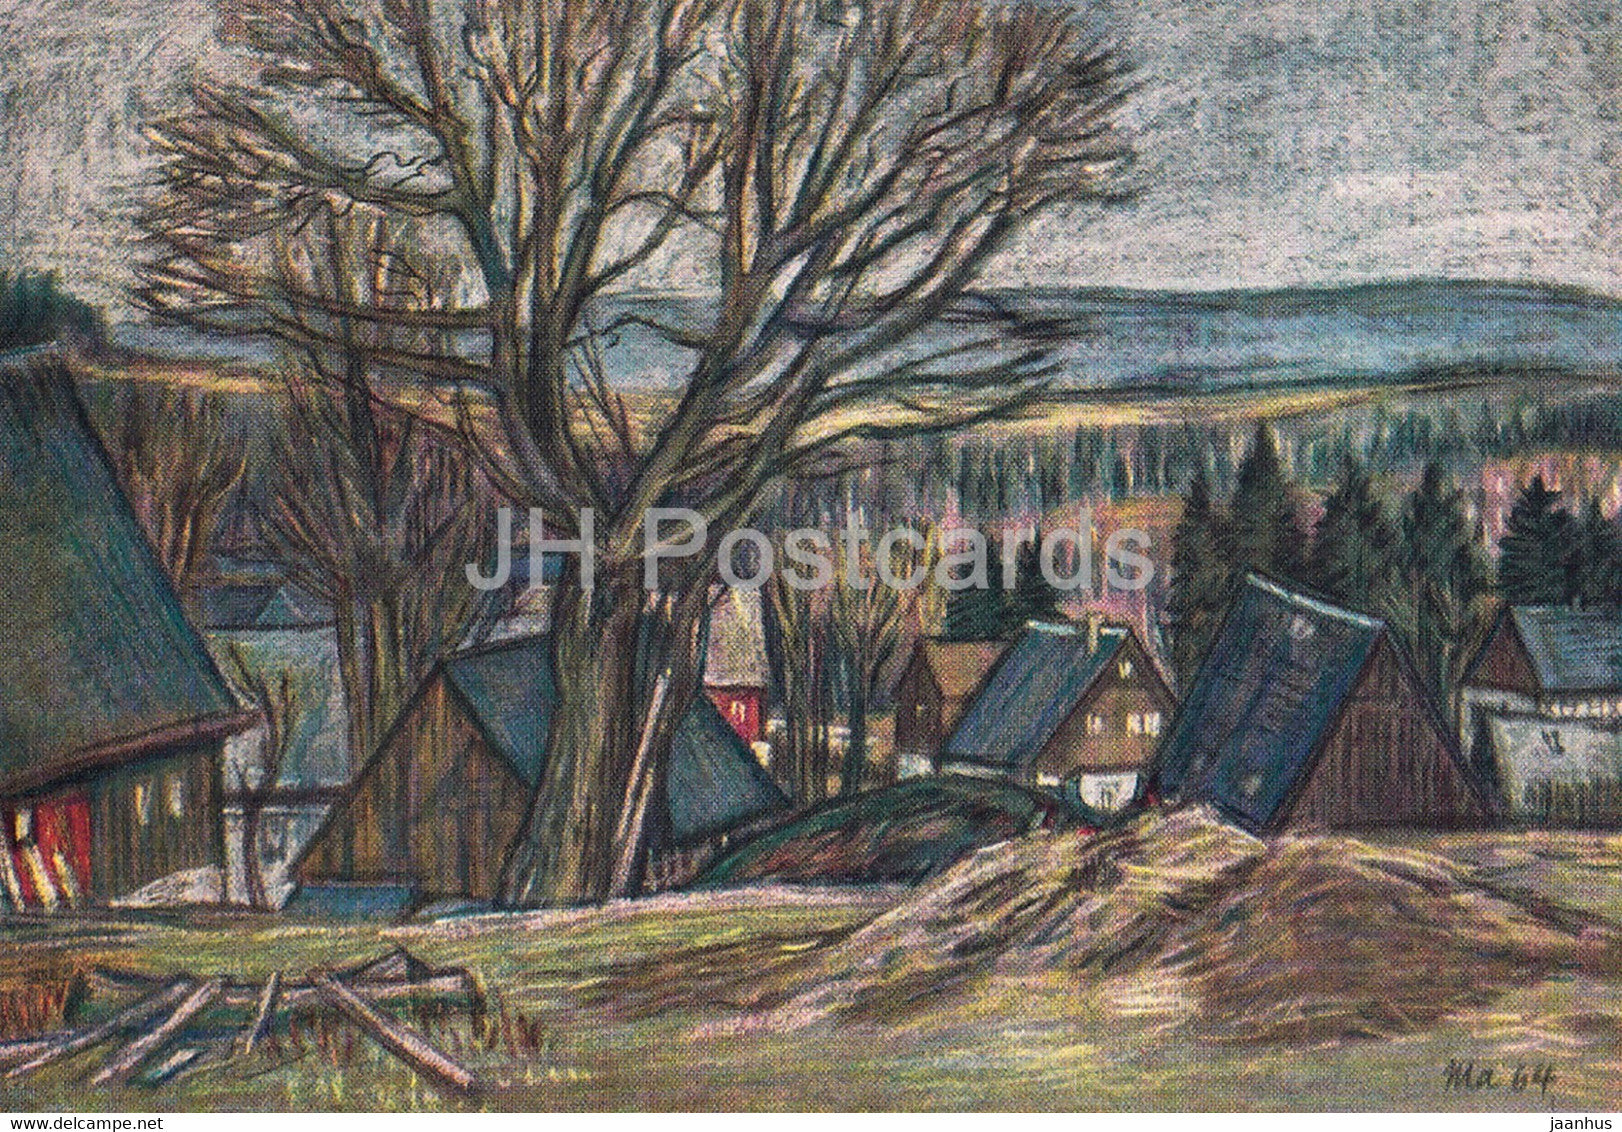 painting by Rudolf Manuwald - Grumbach - German art - Germany - unused - JH Postcards